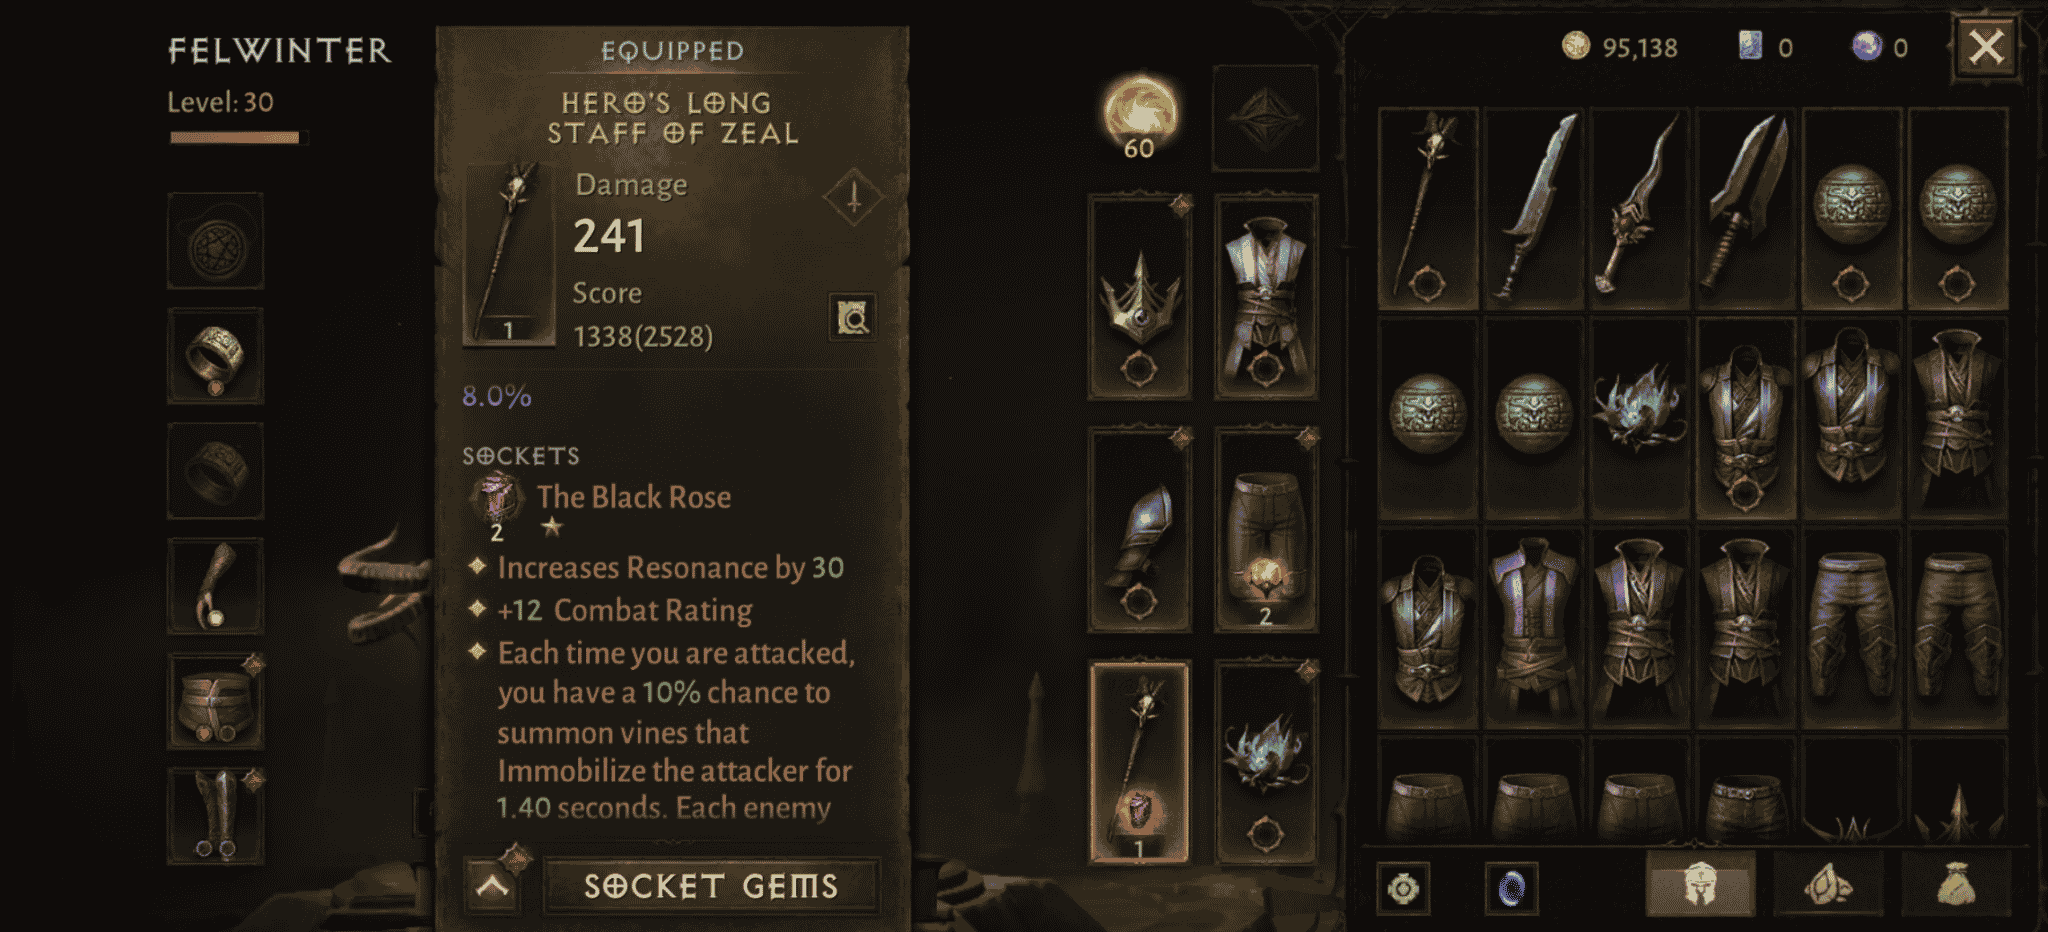 Legendary gem combat rating bonus in Diablo Immortal